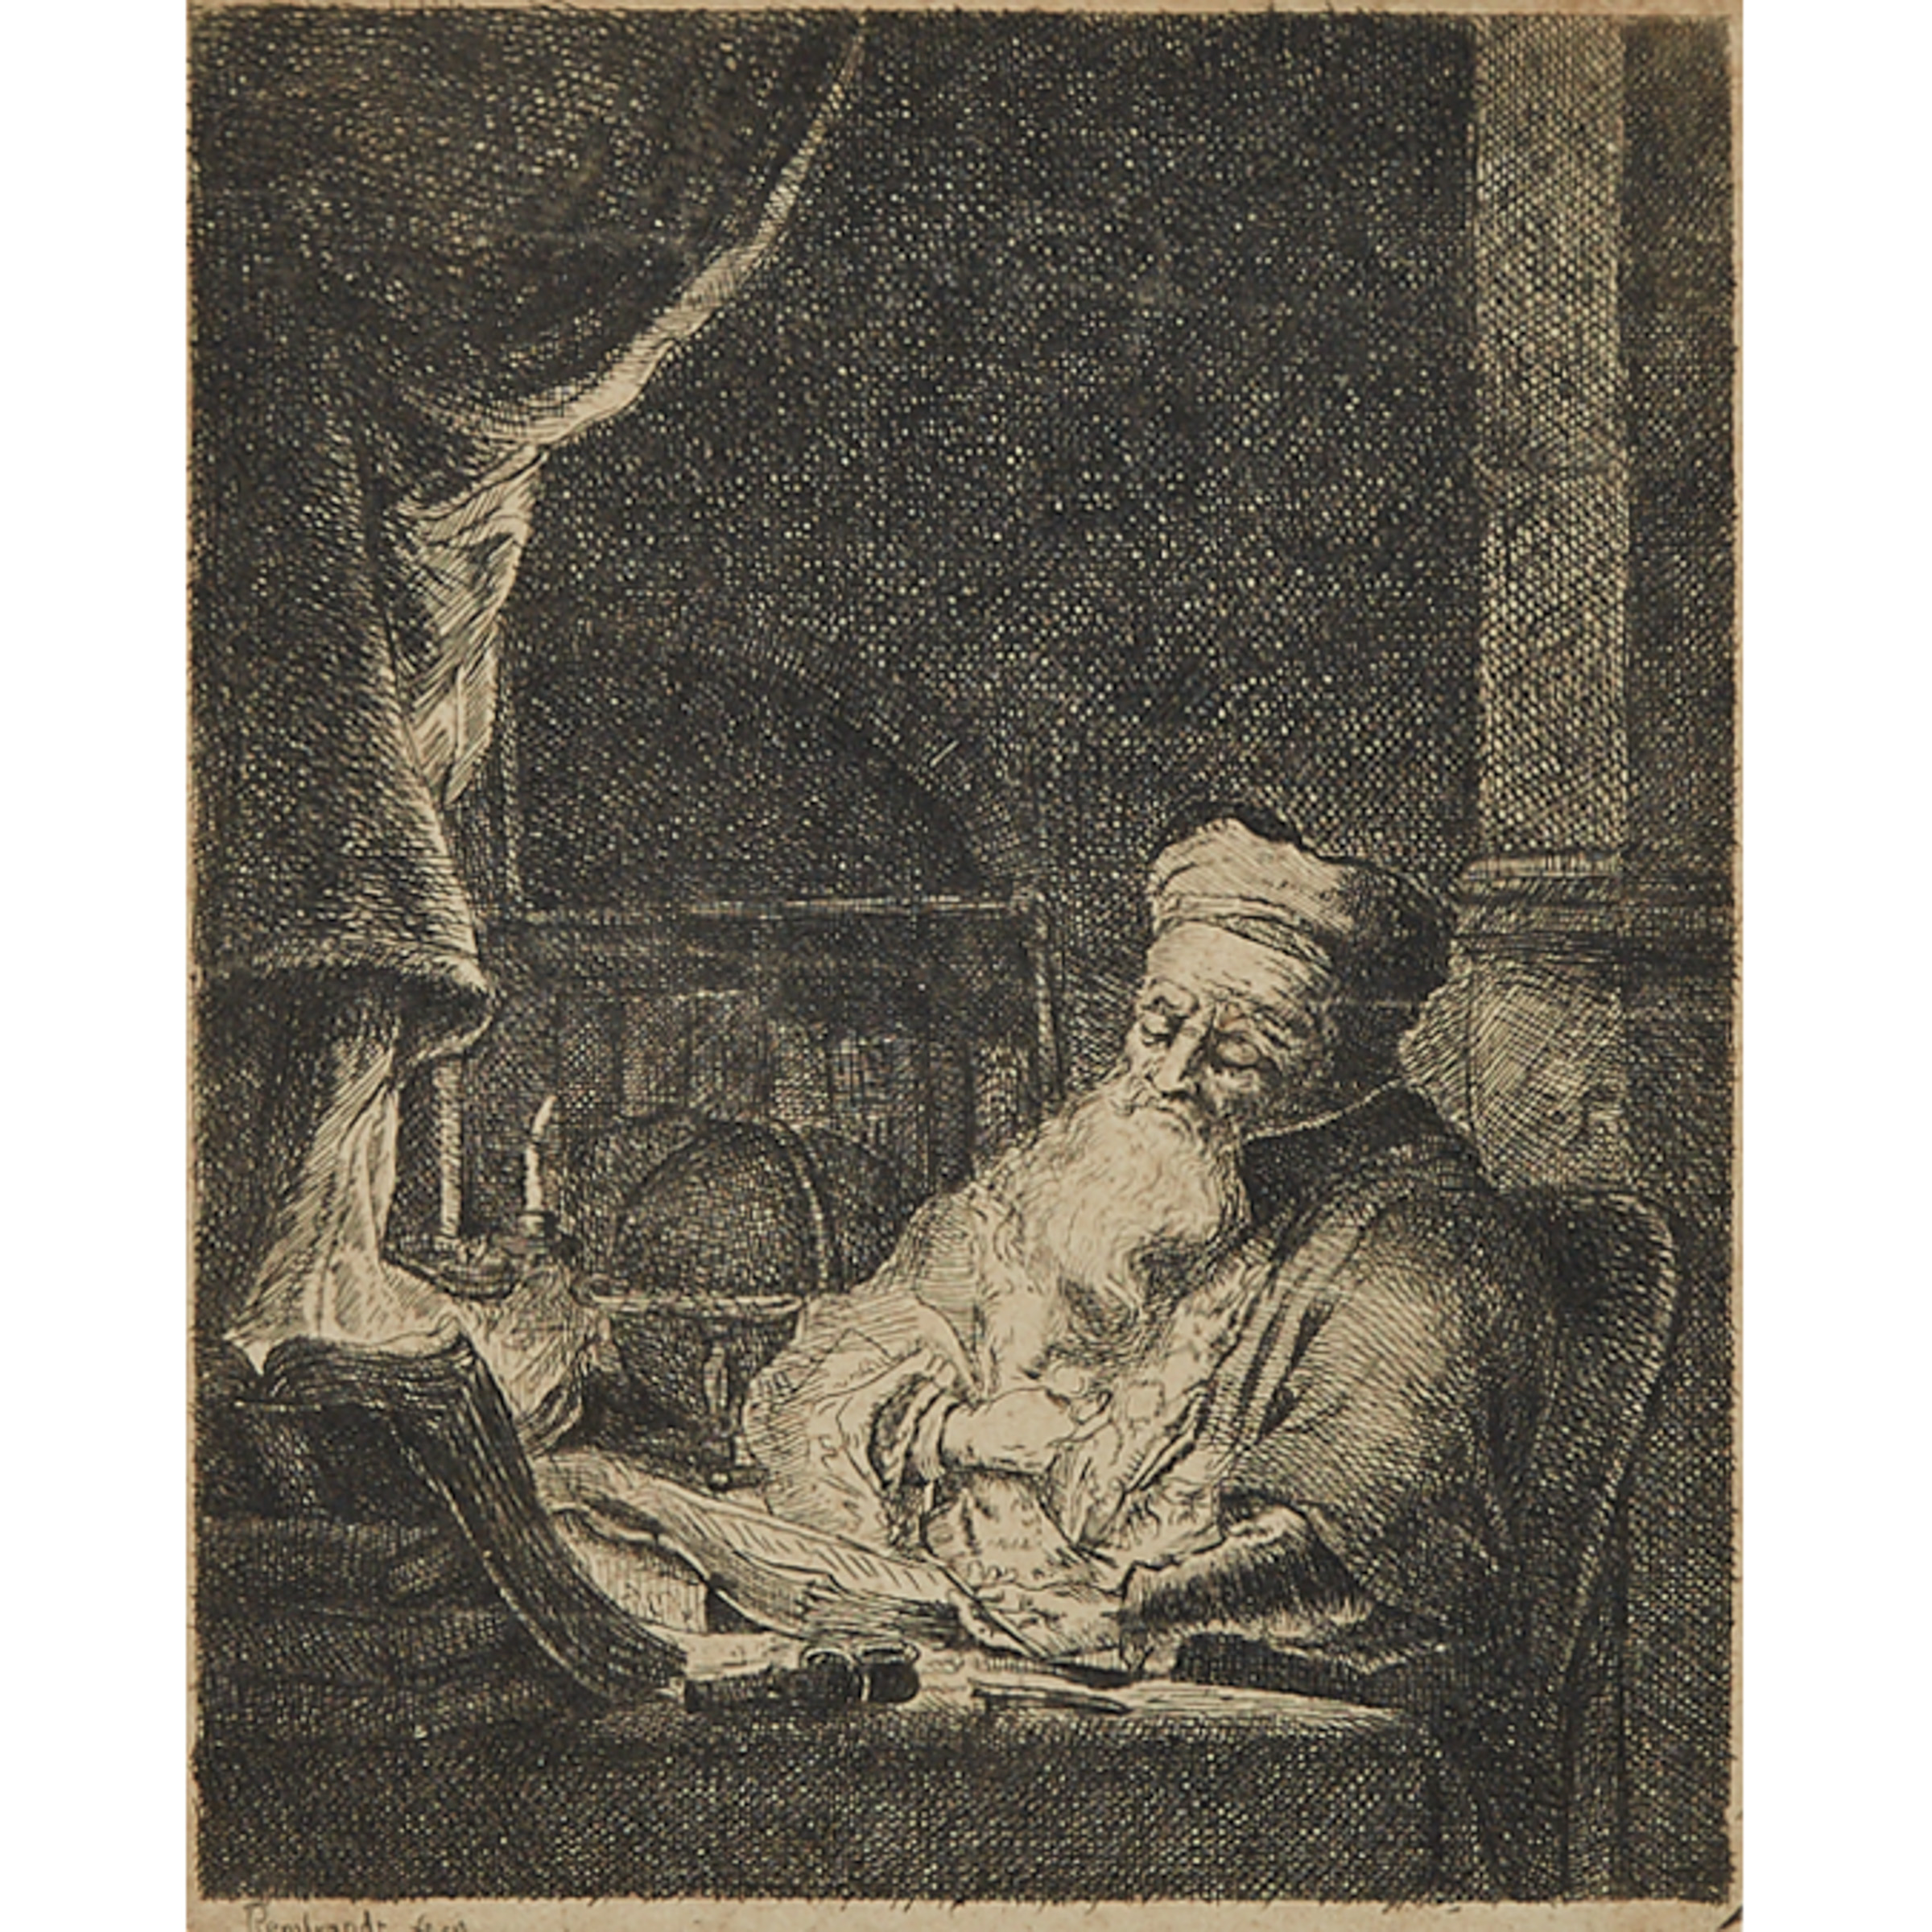 After Rembrandt van Rijn (1606–1669)